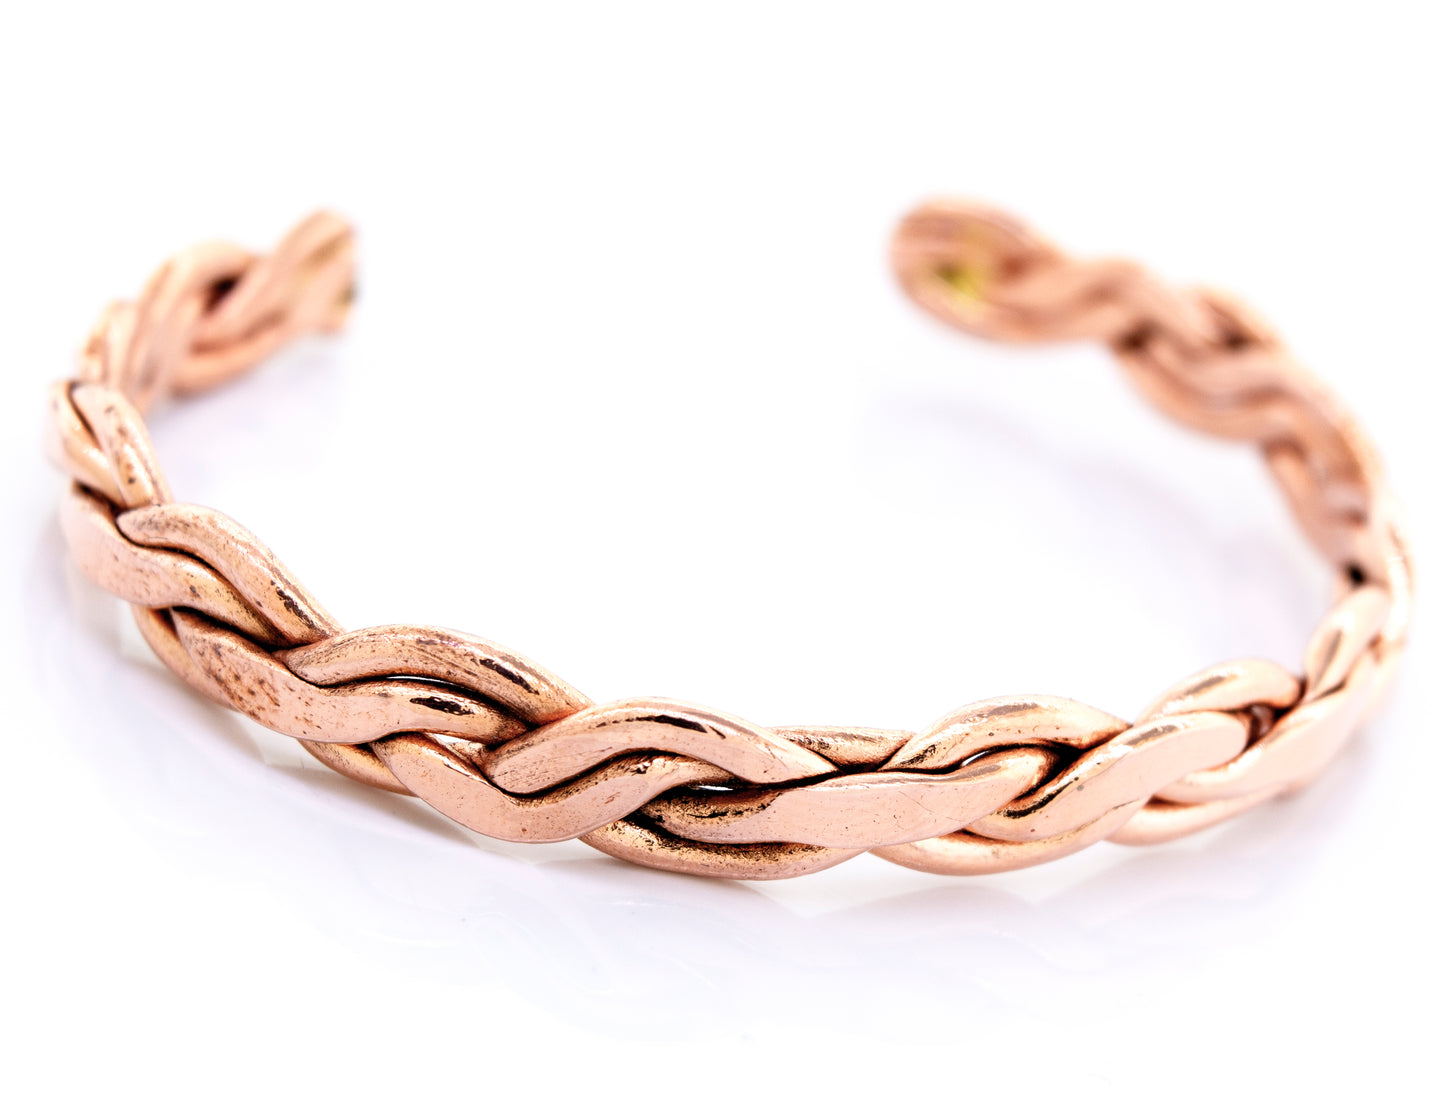 A Super Silver copper bracelet with a braided weave design.